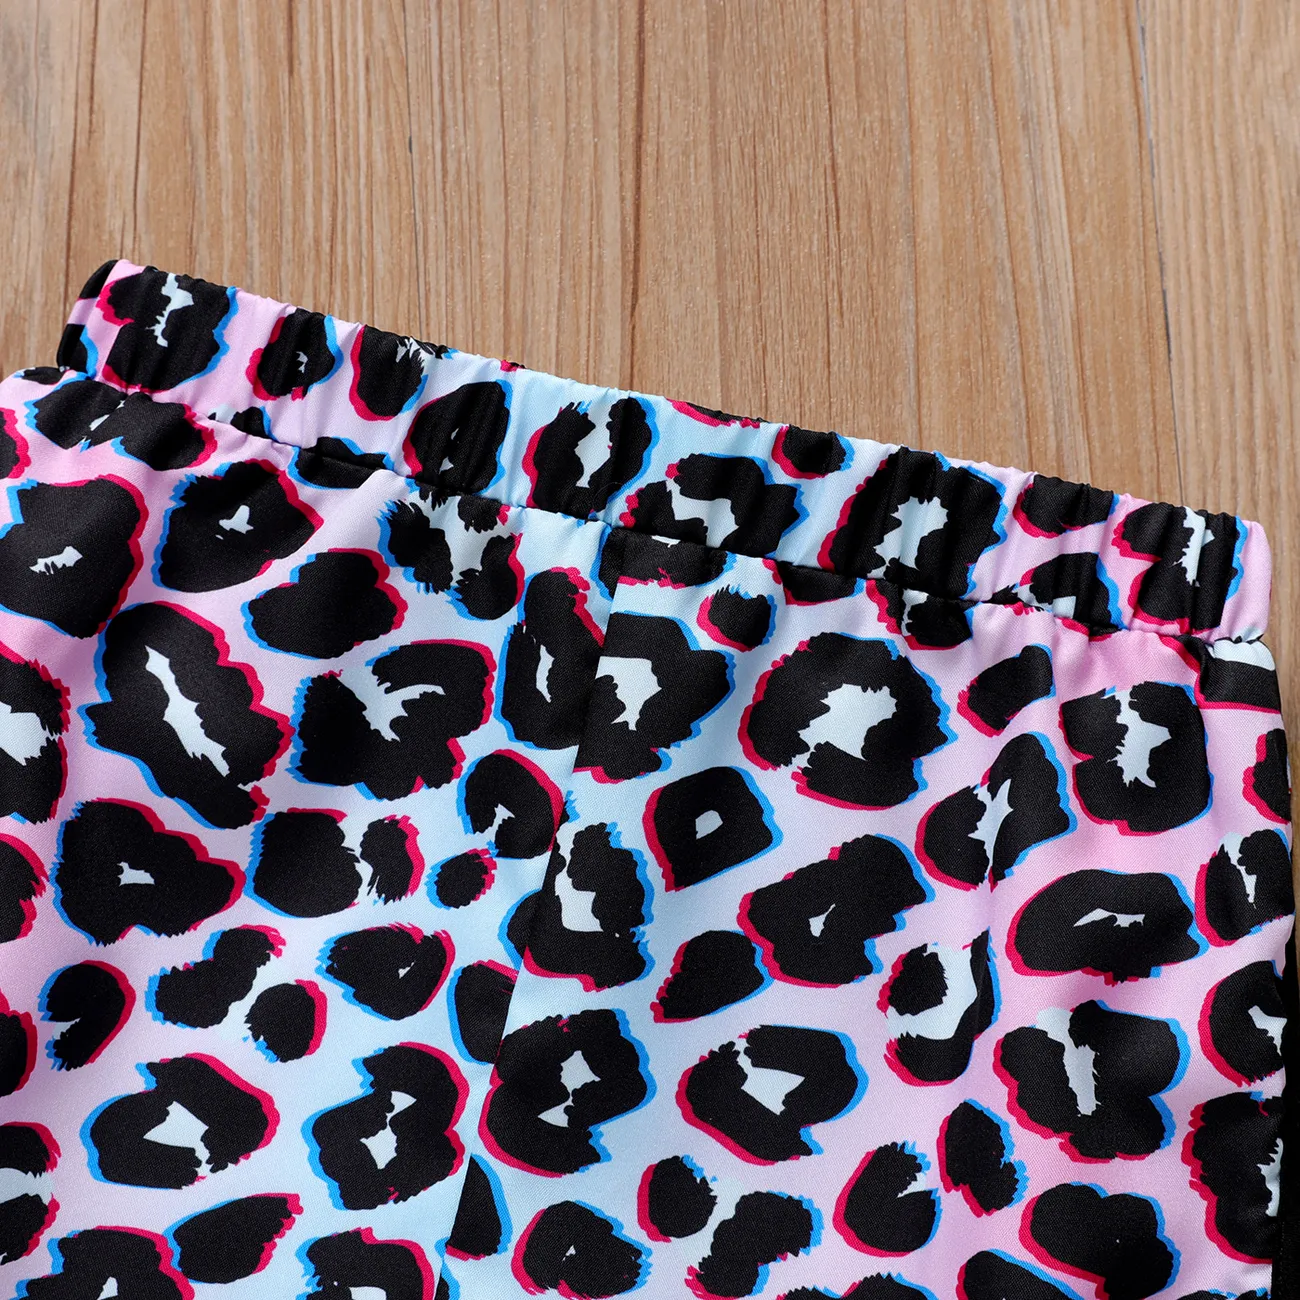 2pcs Kid Girl Figure Print Short-sleeve Tee and Leopard Print Shorts Set Dark Pink big image 1